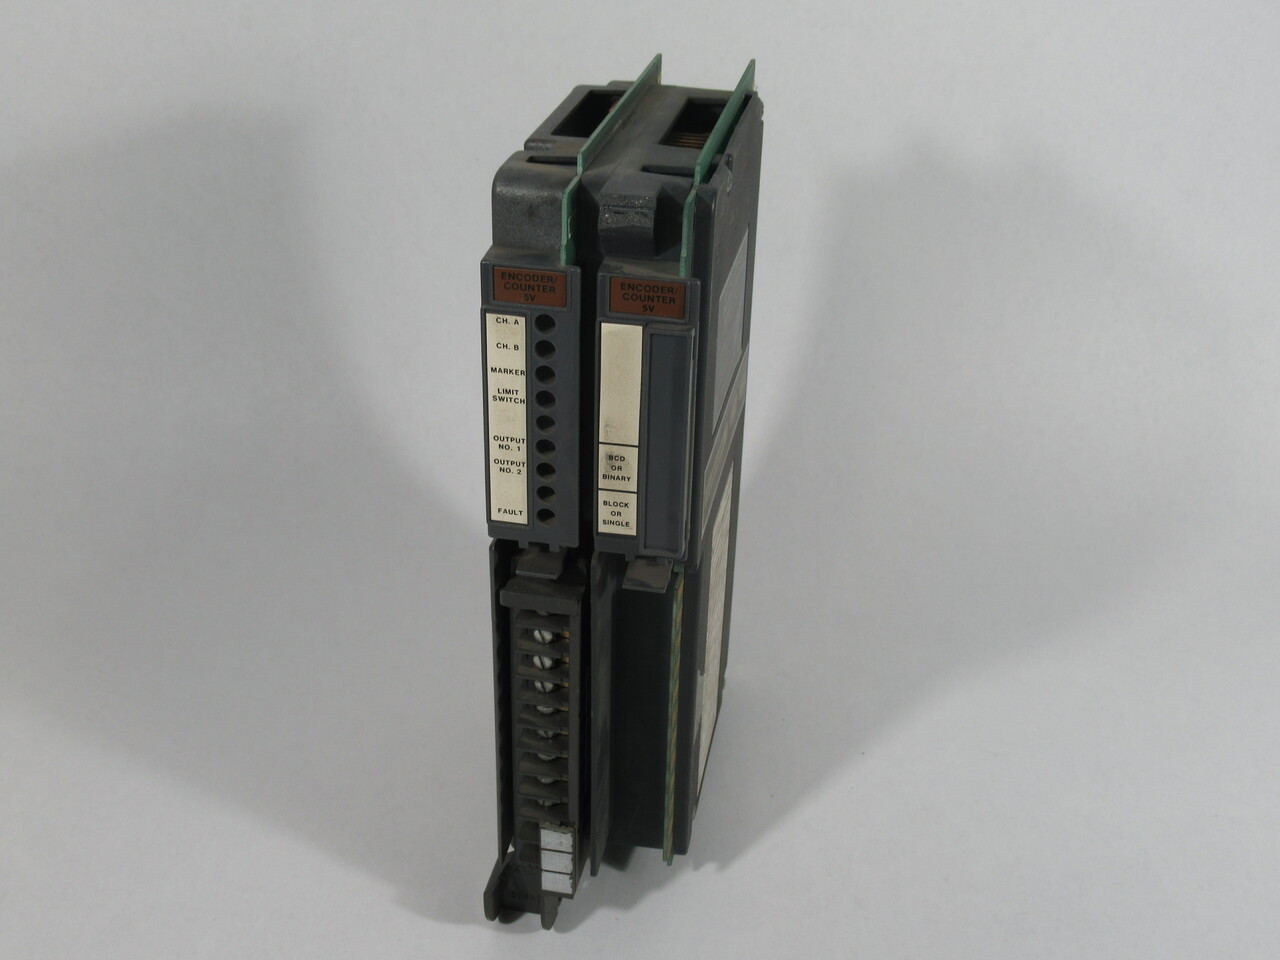 Allen-Bradley 1771-IJC Series A Encoder/Counter Module 5V I/OUSED